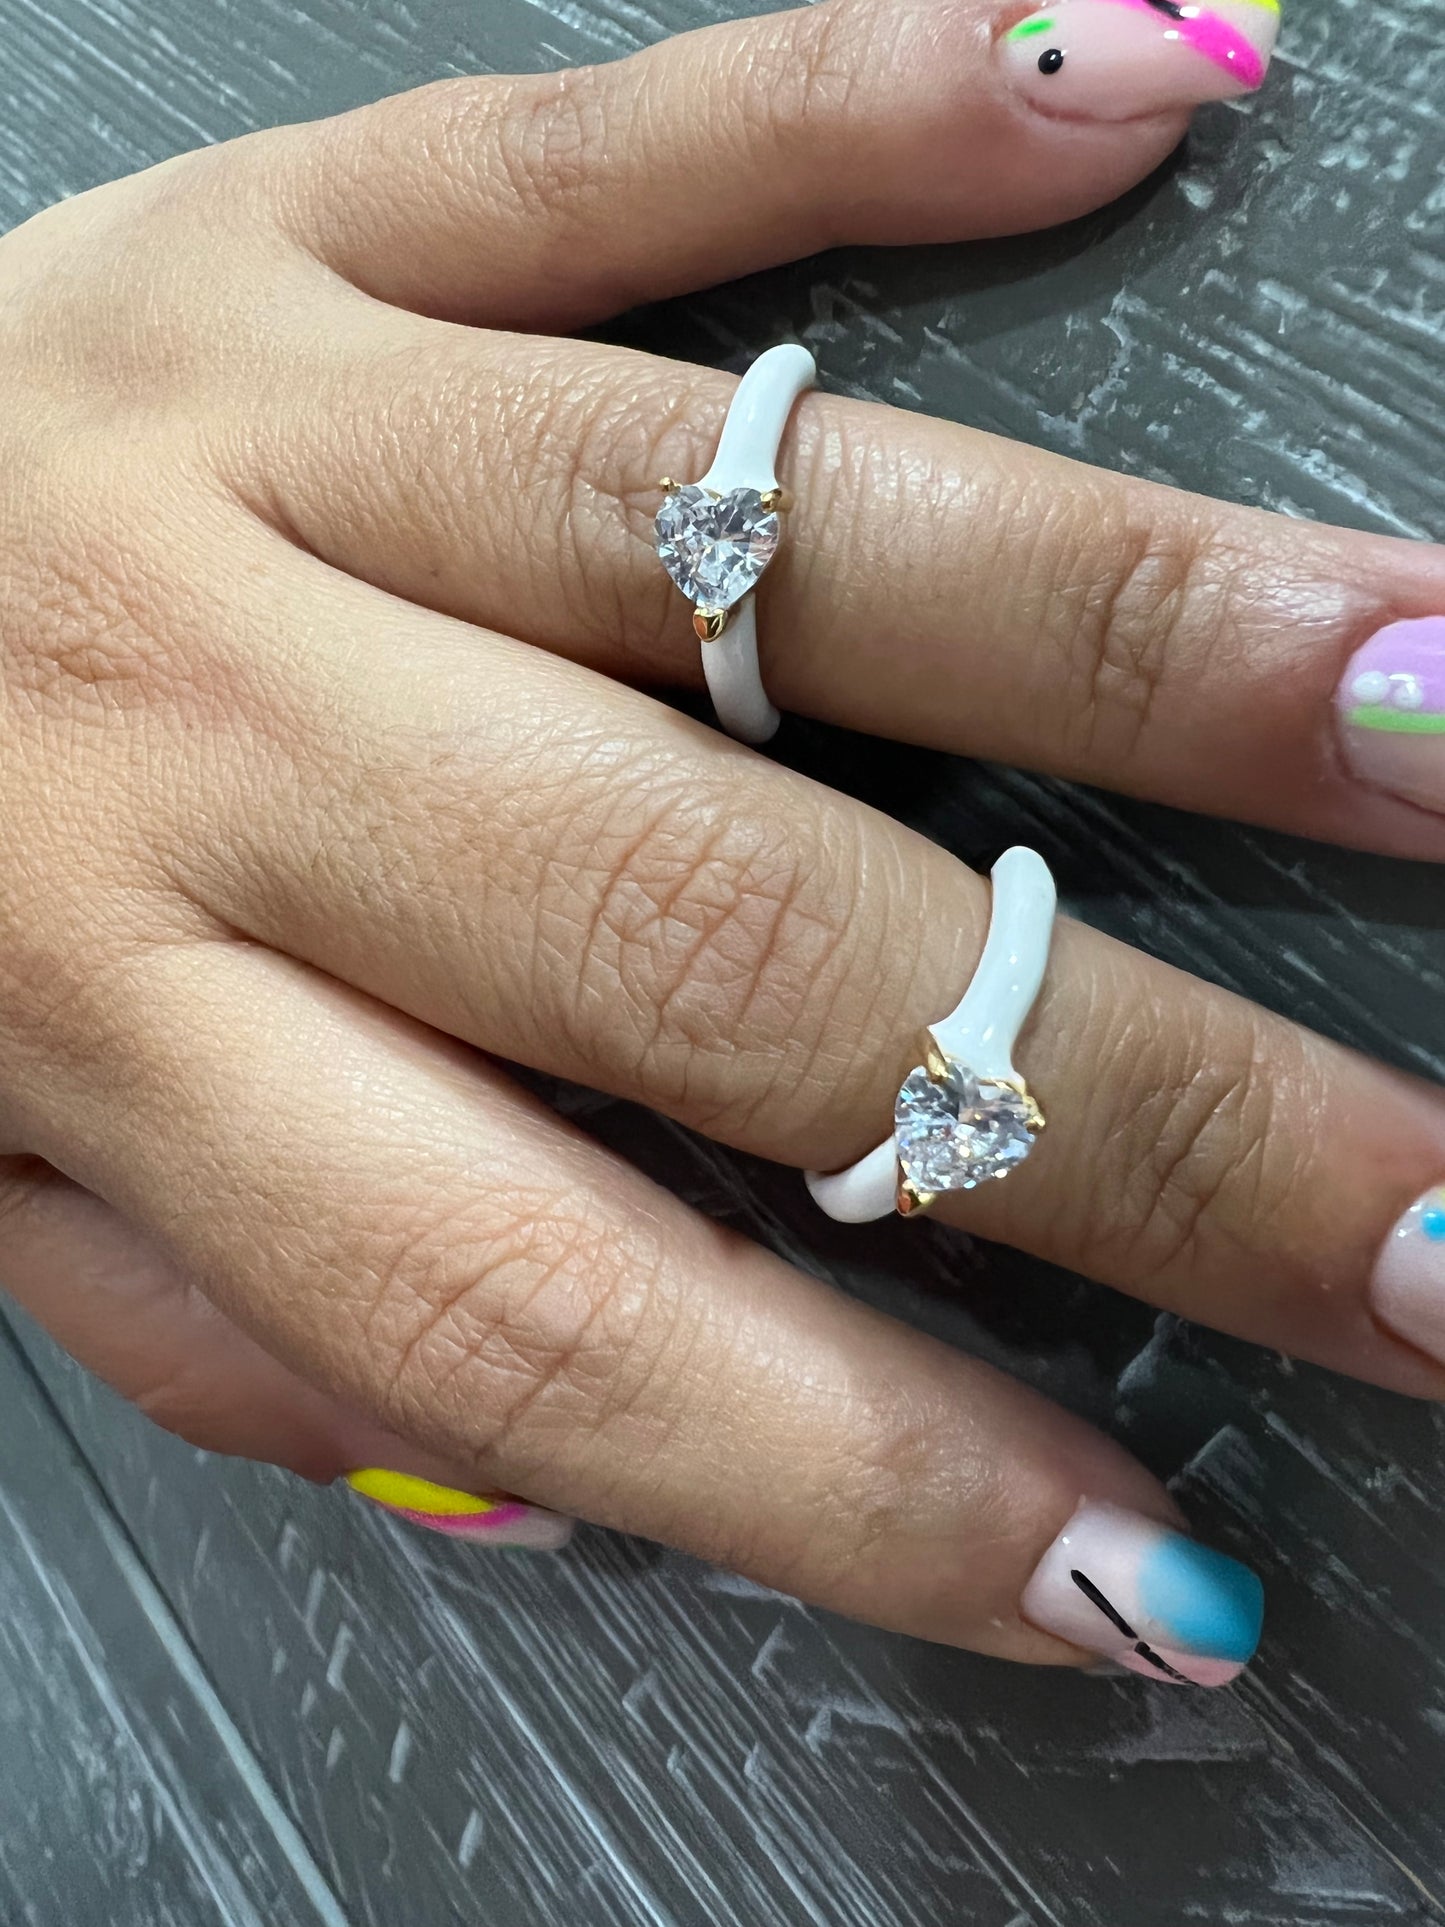 White band ring with heart shaped Rhinestone